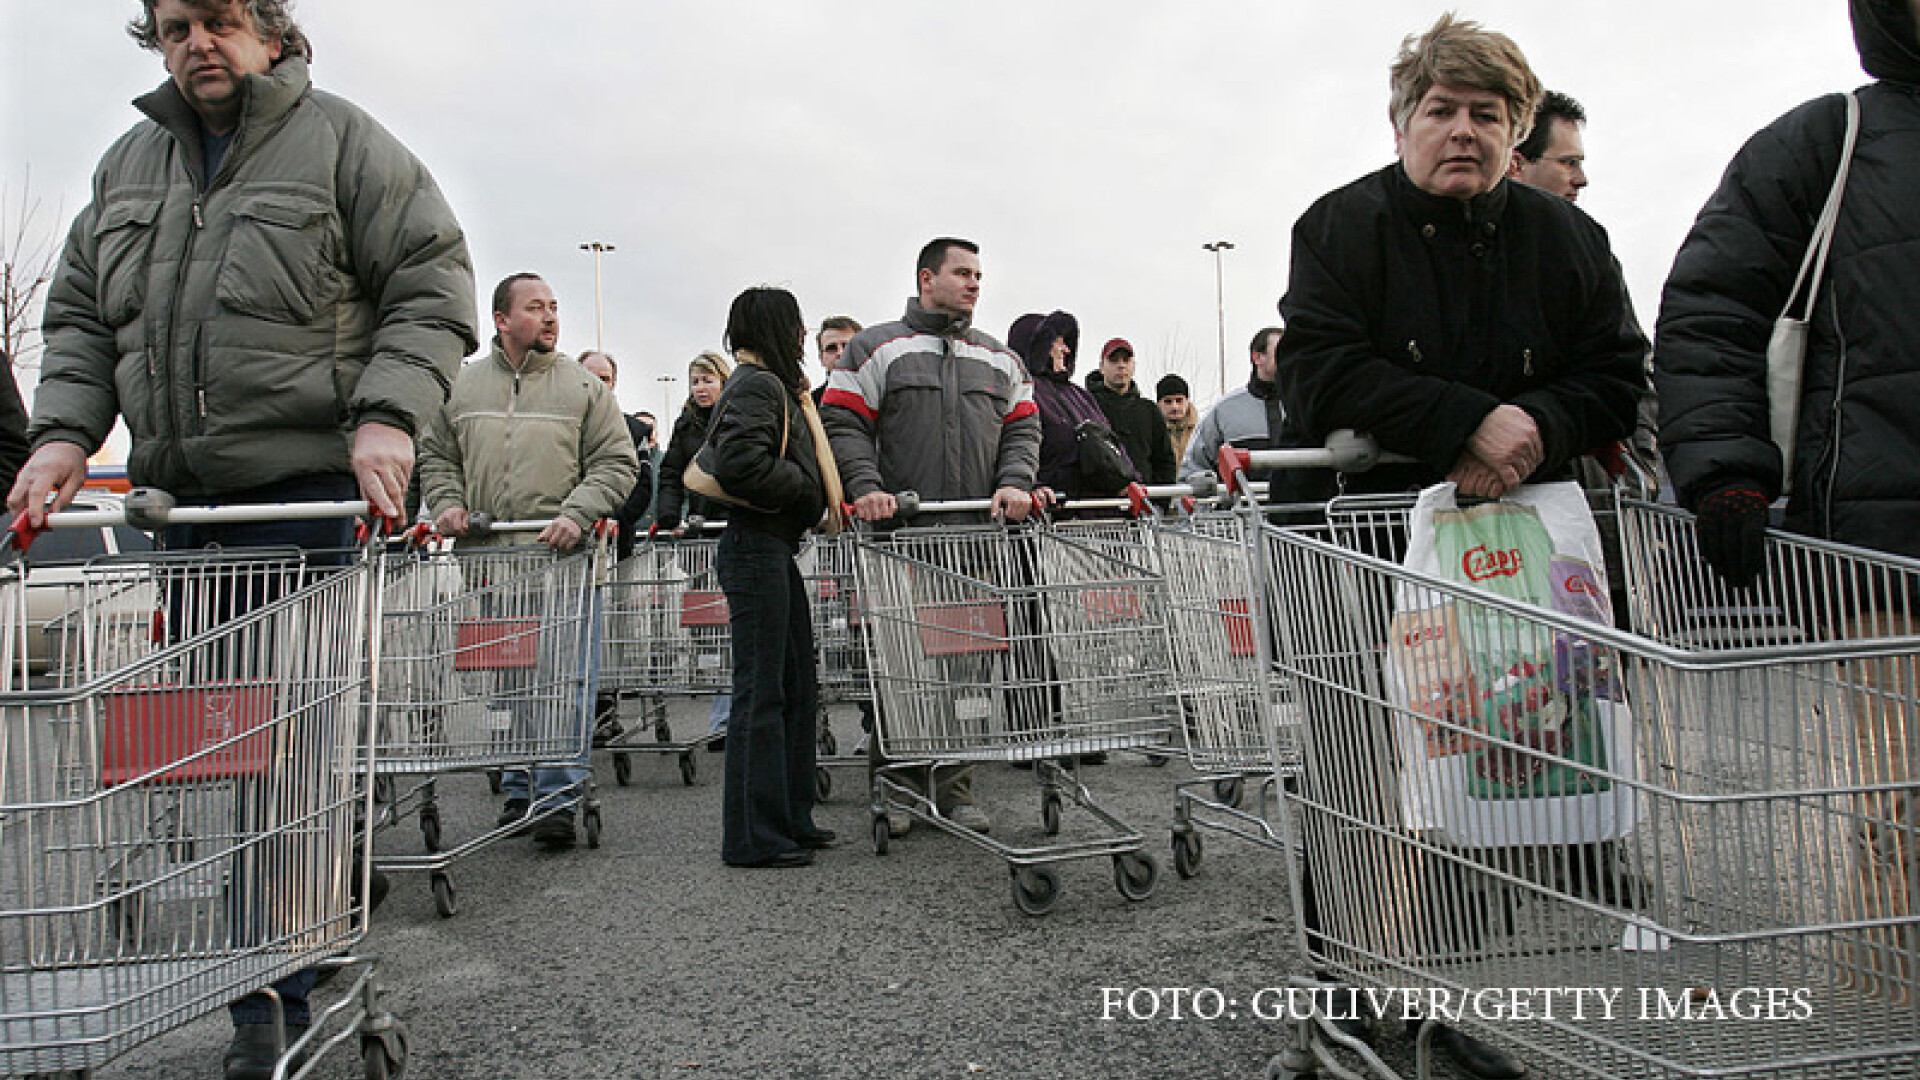 Shoppers wait to enter a Tesco hypermarket in Bratislava, Slovakia